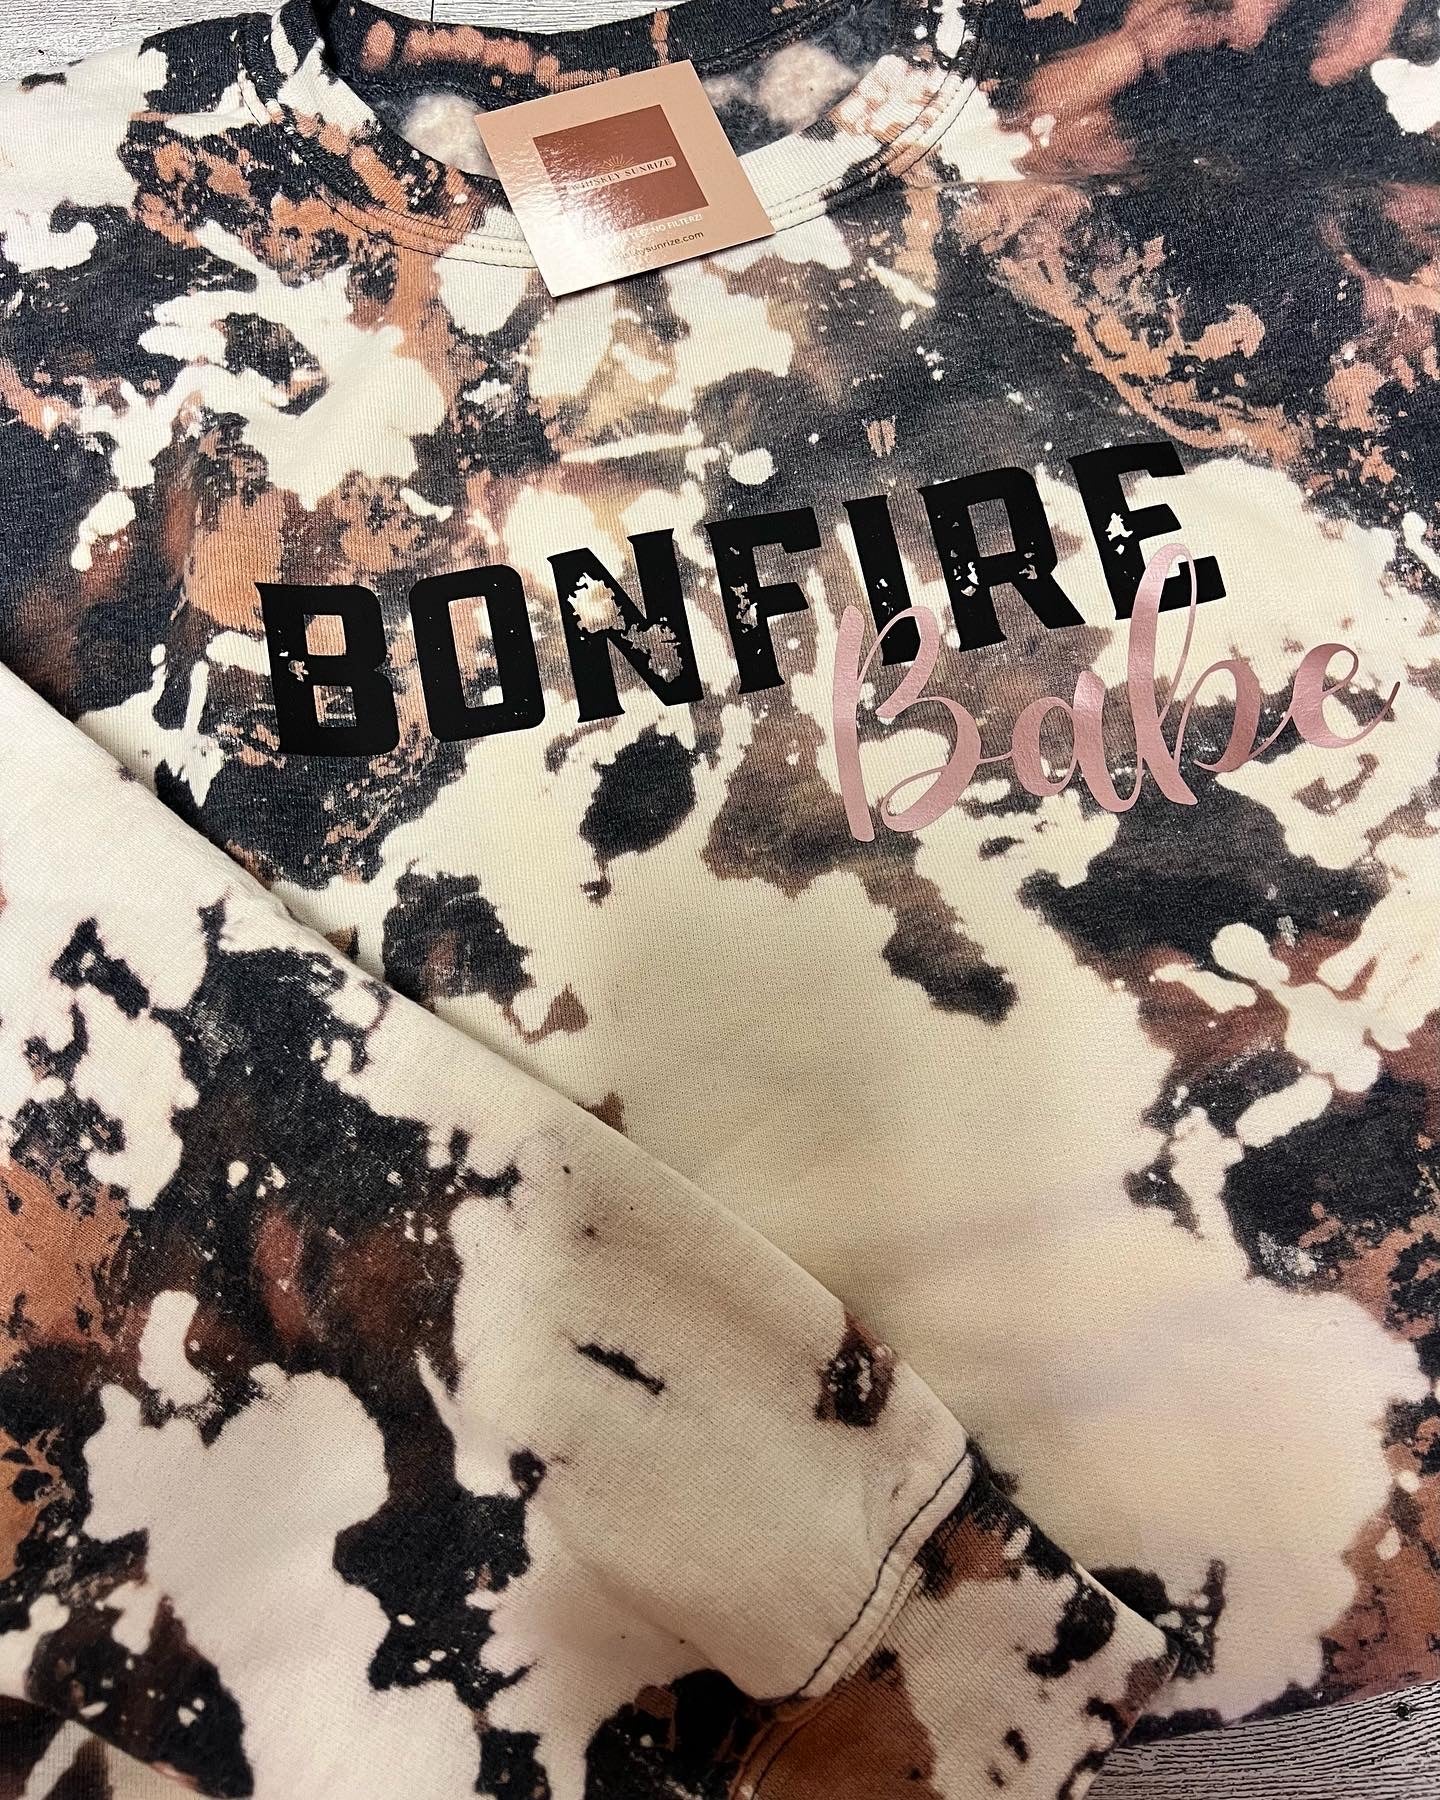 Bonfire Babe